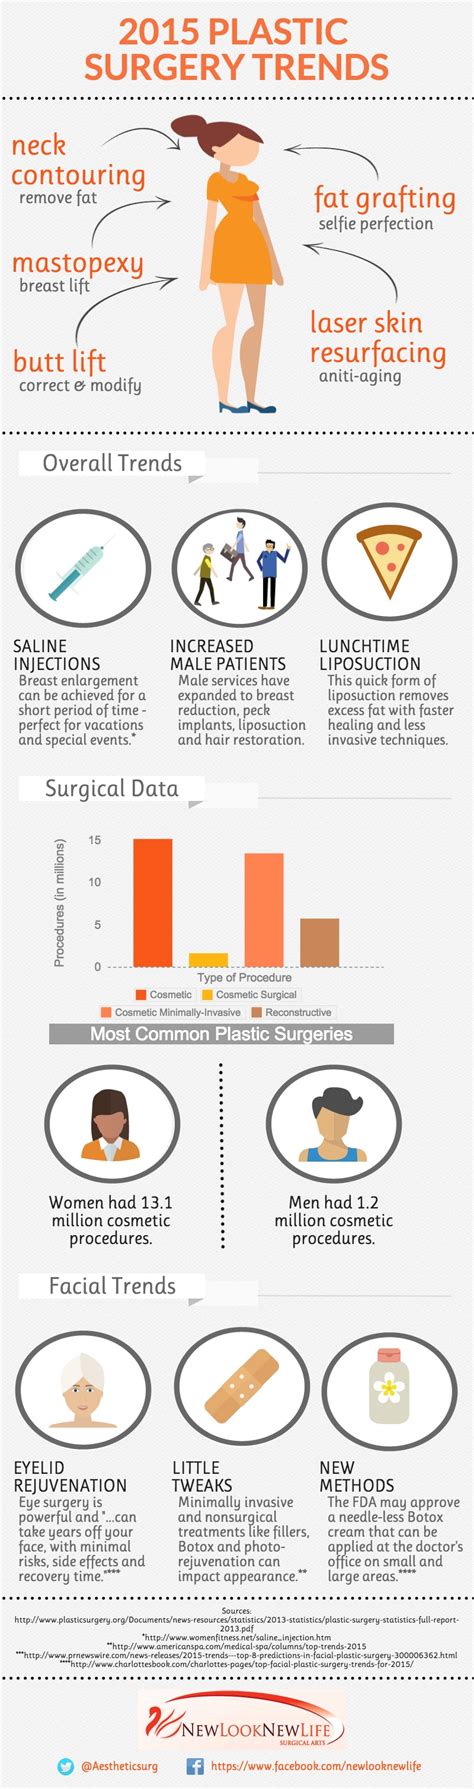 2015 Plastic Surgery Trends